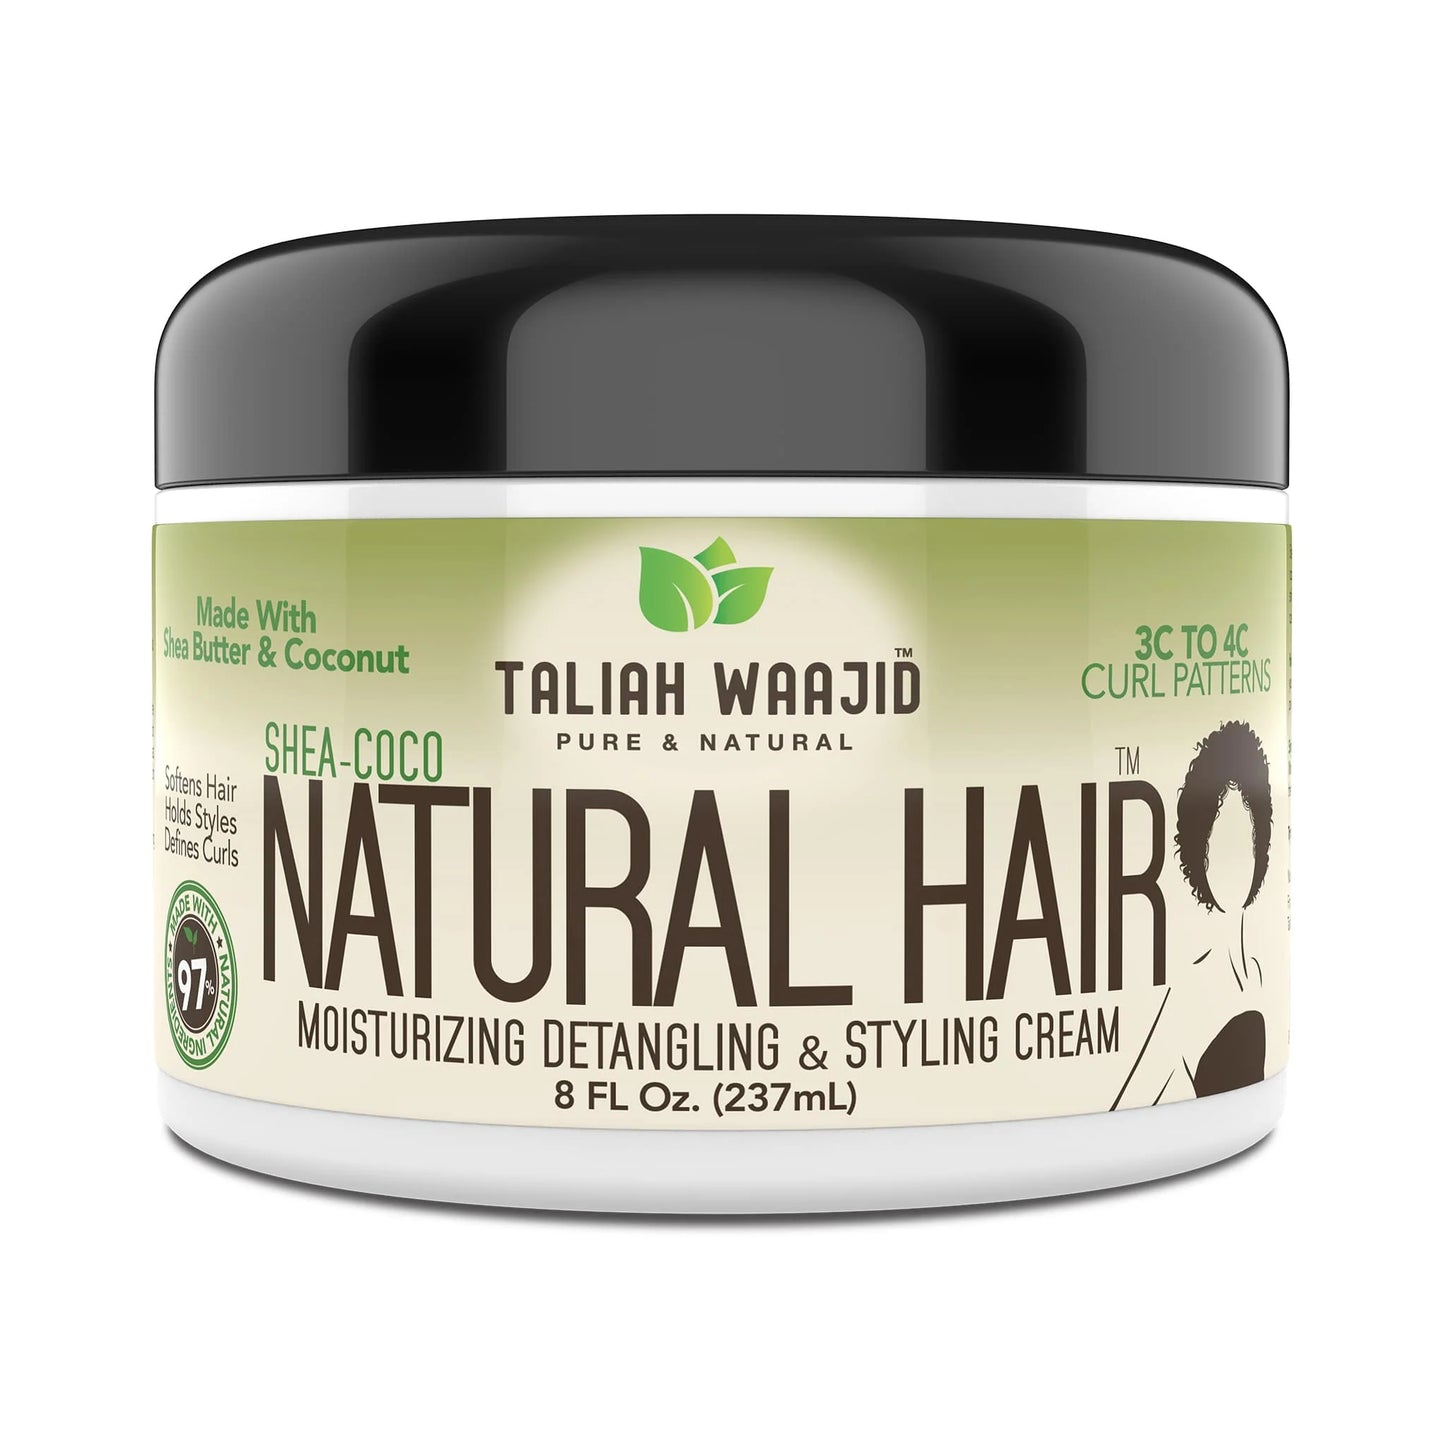 Taliah Waajid Shea-Coco Natural Hair Styling Cream